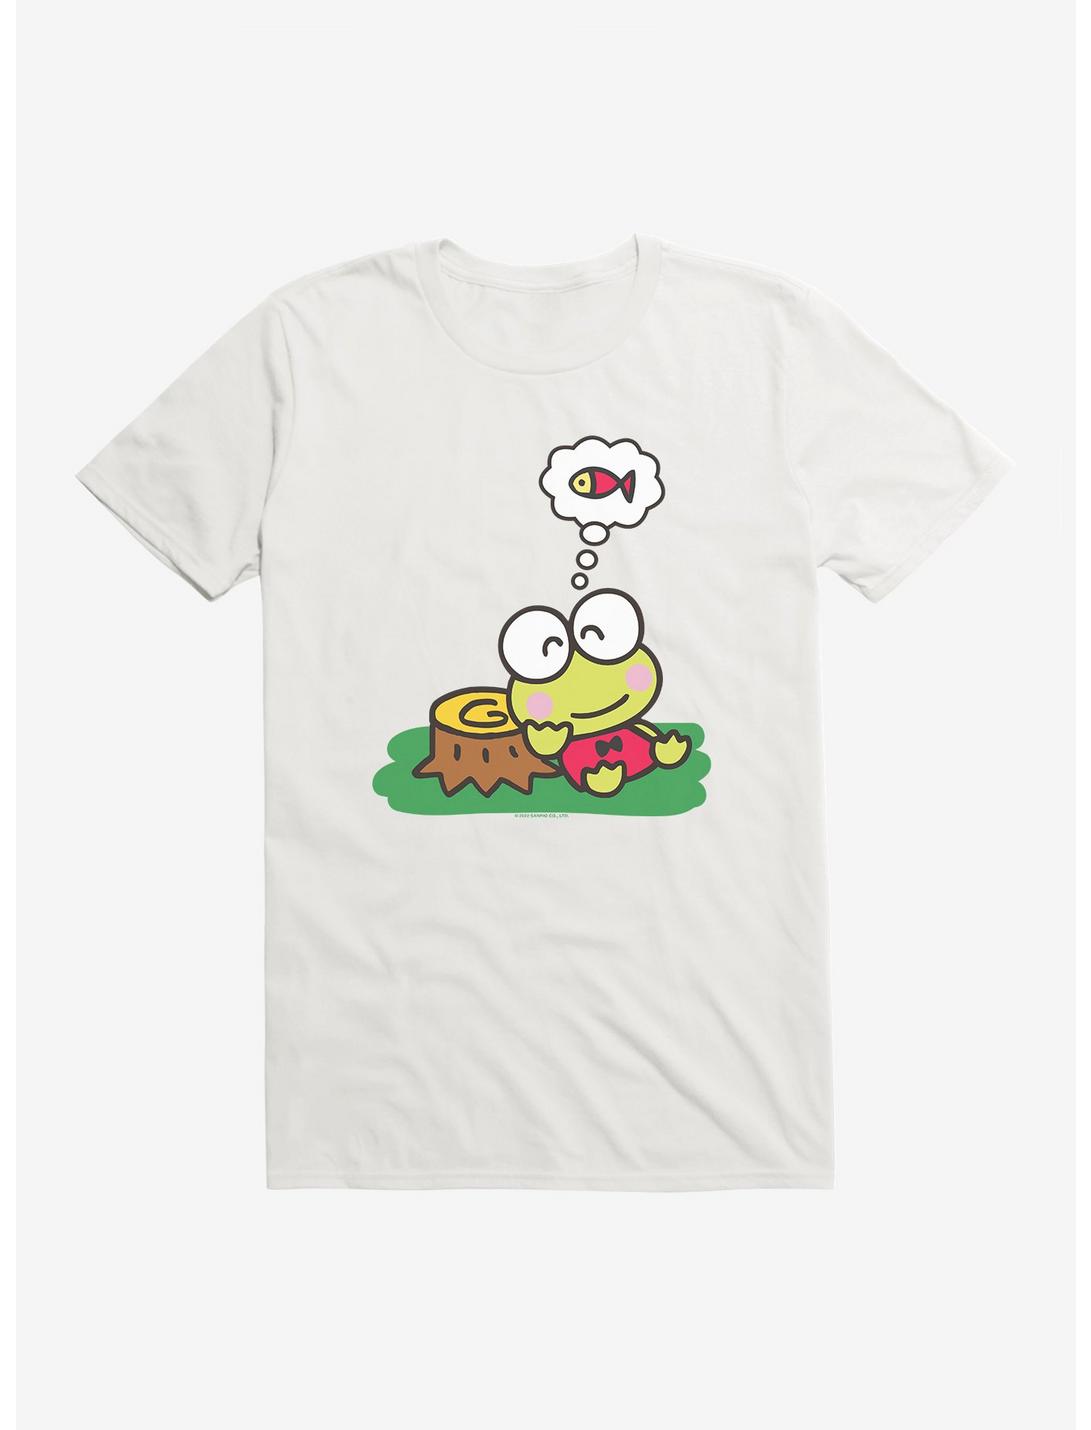 Keroppi Outdoor Thinking T-Shirt, WHITE, hi-res